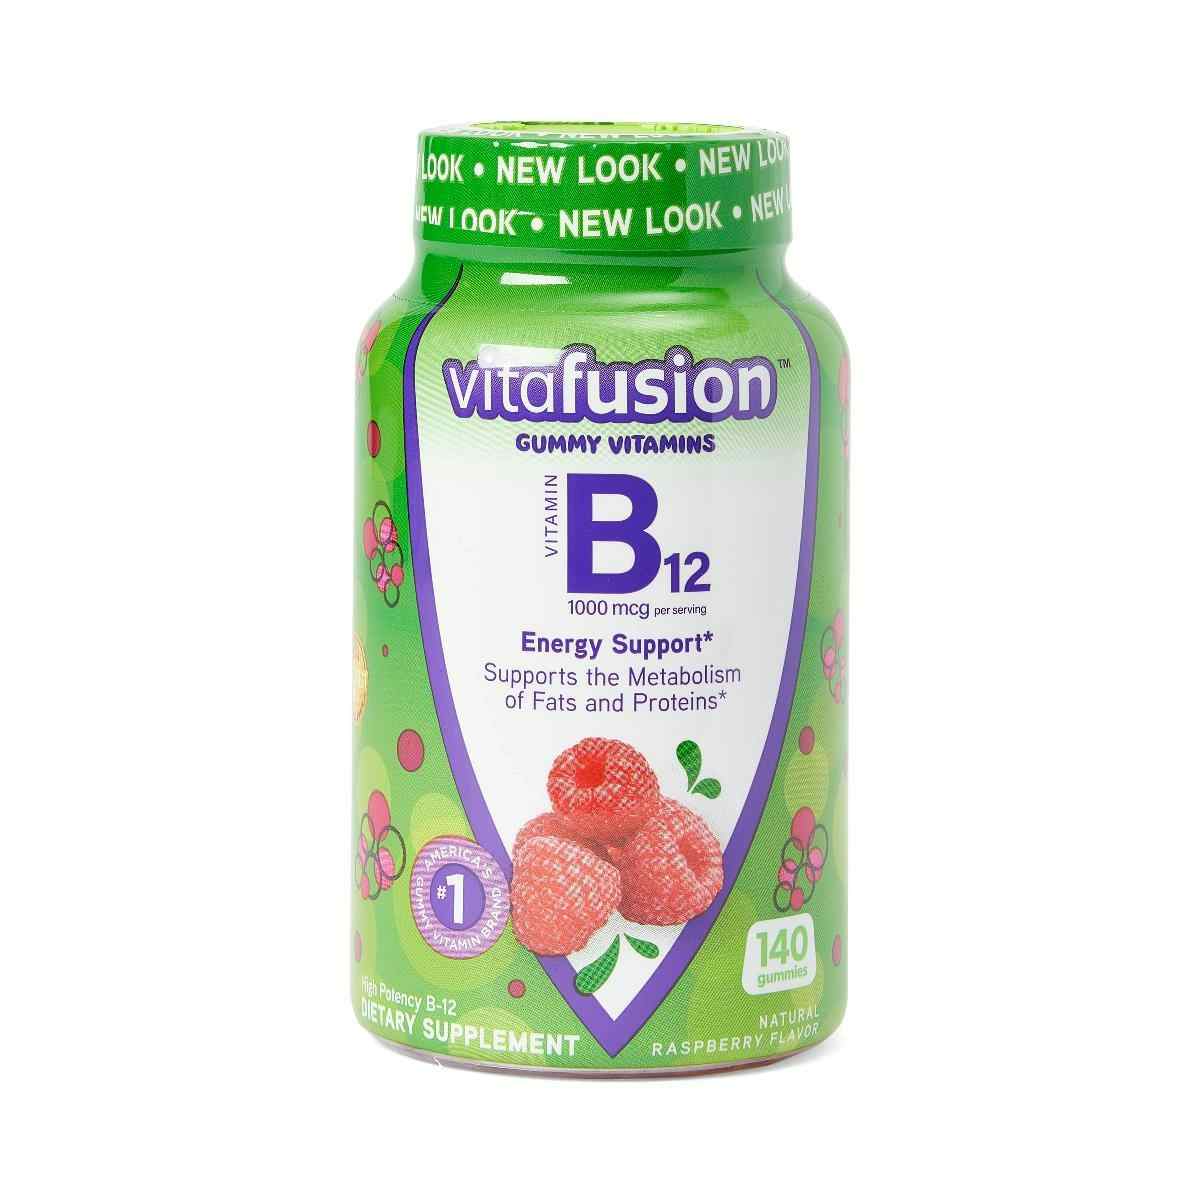 Vitafusion B-12 Vitamin Gummy Supplement, 1000 mcg, 140 Gummies, C-H917270975H, 140 Gummies - 1 Bottle